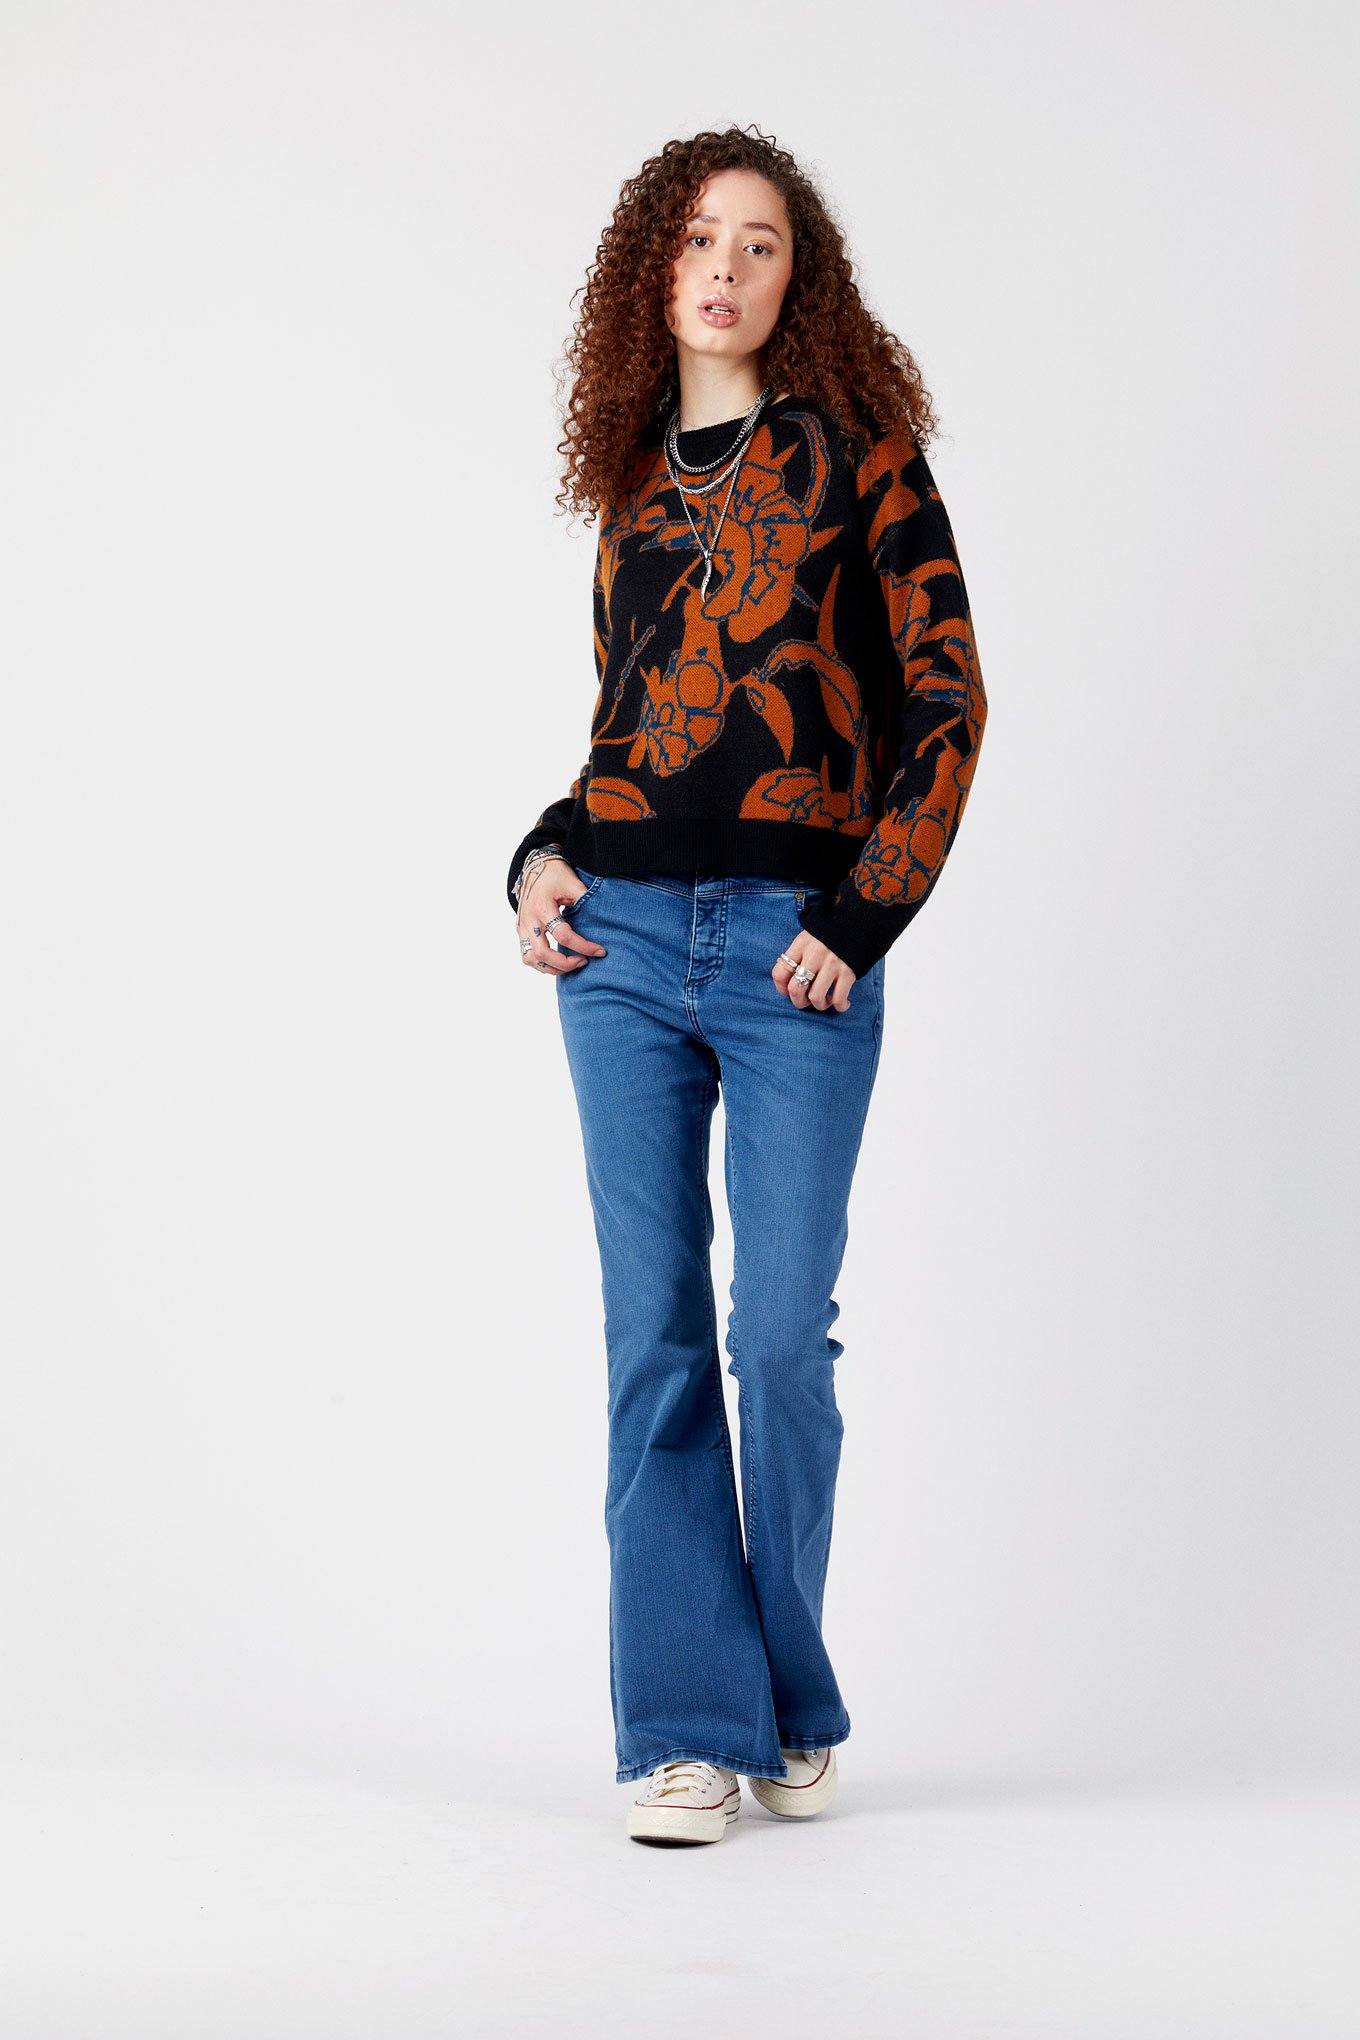 MAVIS Azure - GOTS Organic Cotton Jeans by Flax & Loom, 32 / Long